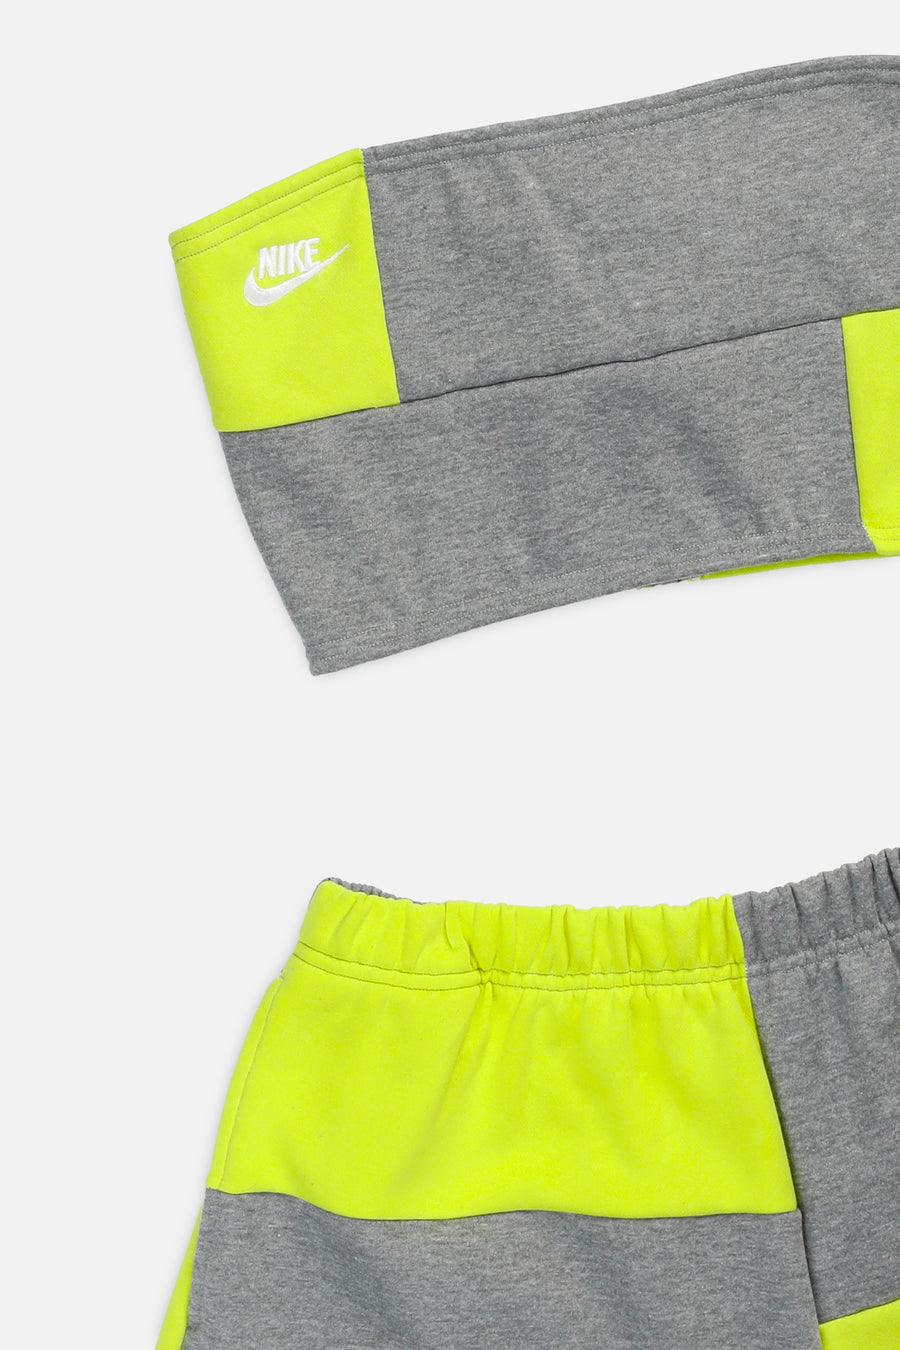 Rework Nike Patchwork Sweatshorts Set - S